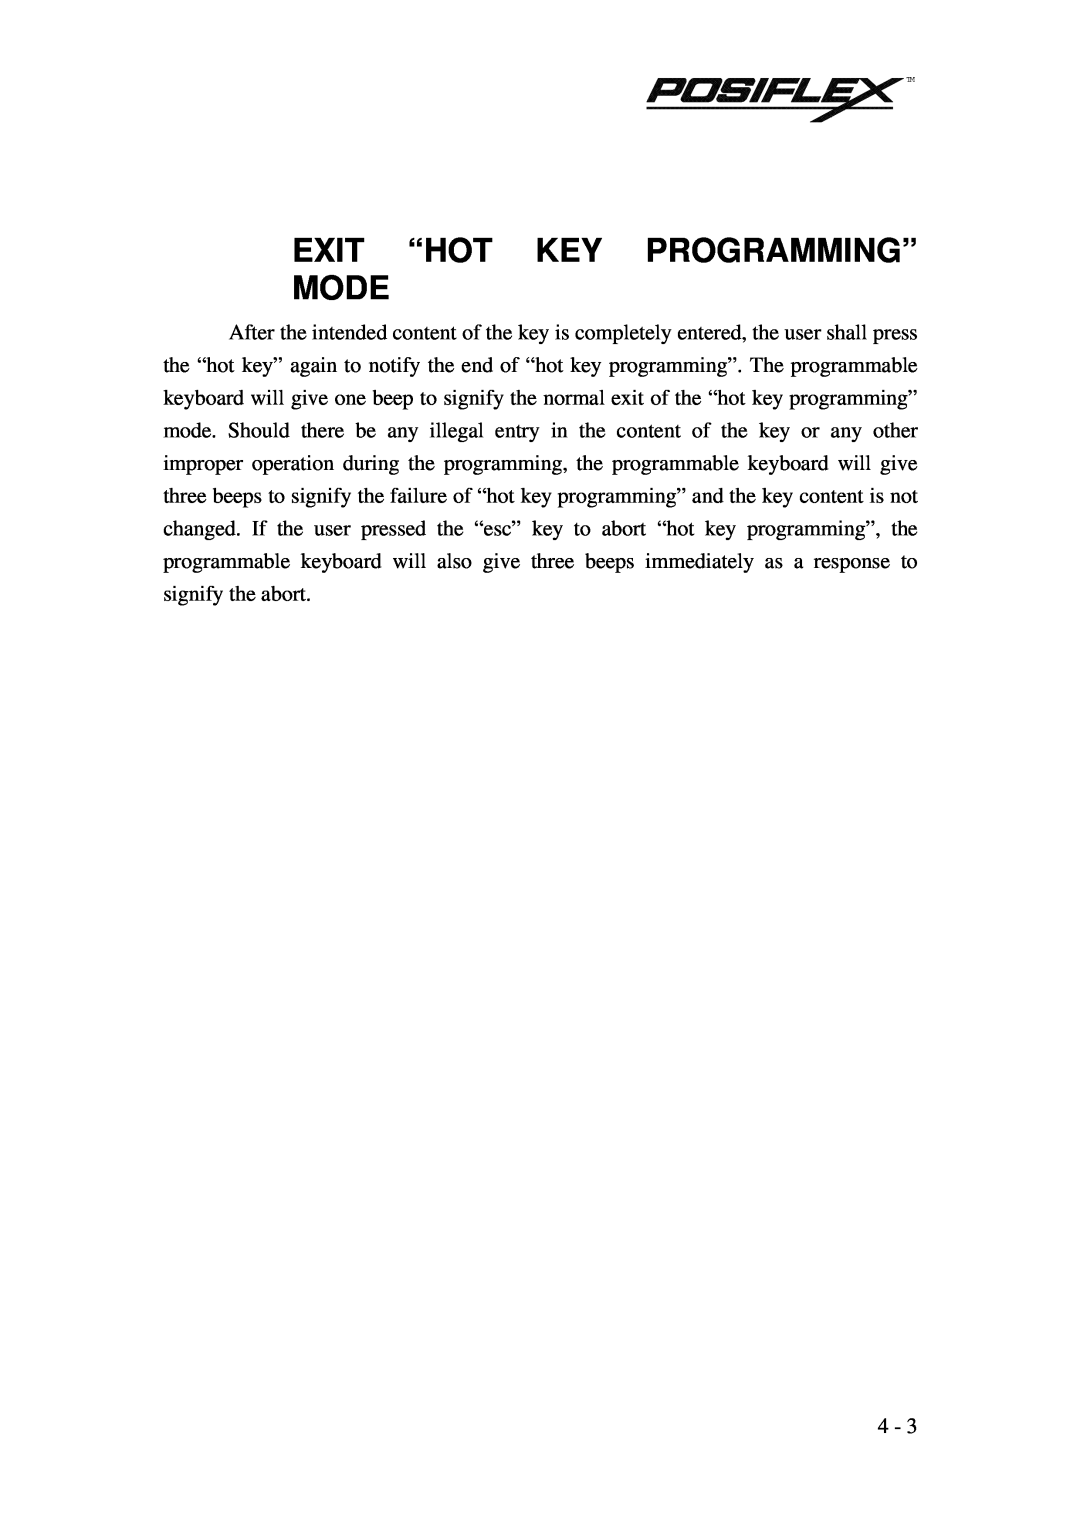 POSIFLEX Business Machines PST KB136 manual Exit “Hot Key Programming” Mode 